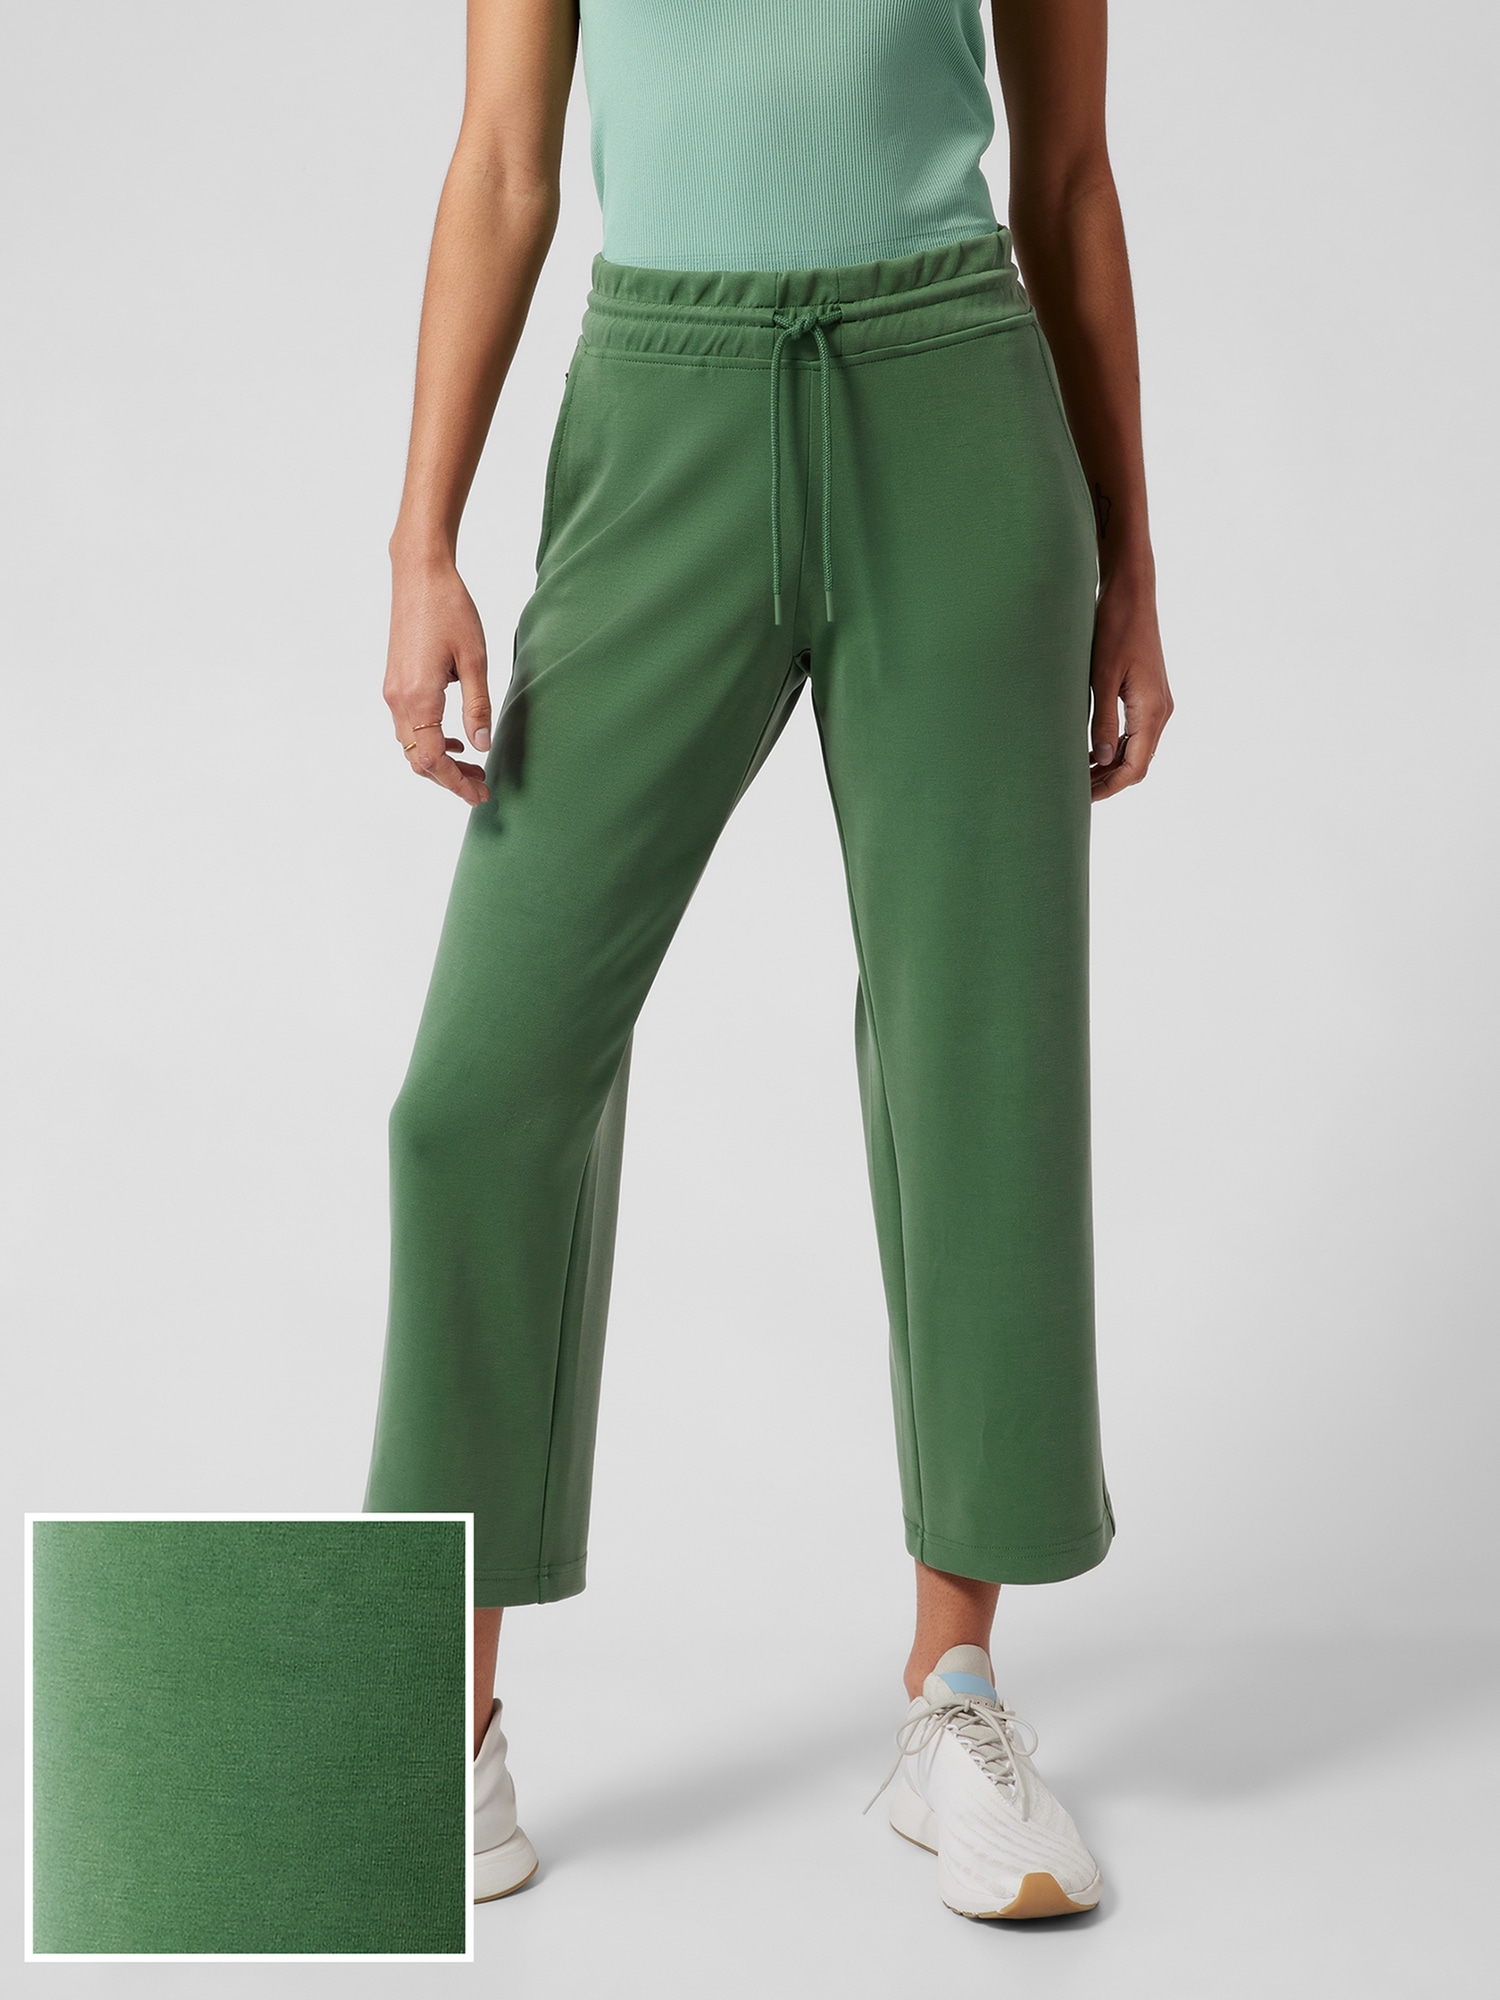 Athleta Camo Green Casual Pants Size 10 (Petite) - 61% off